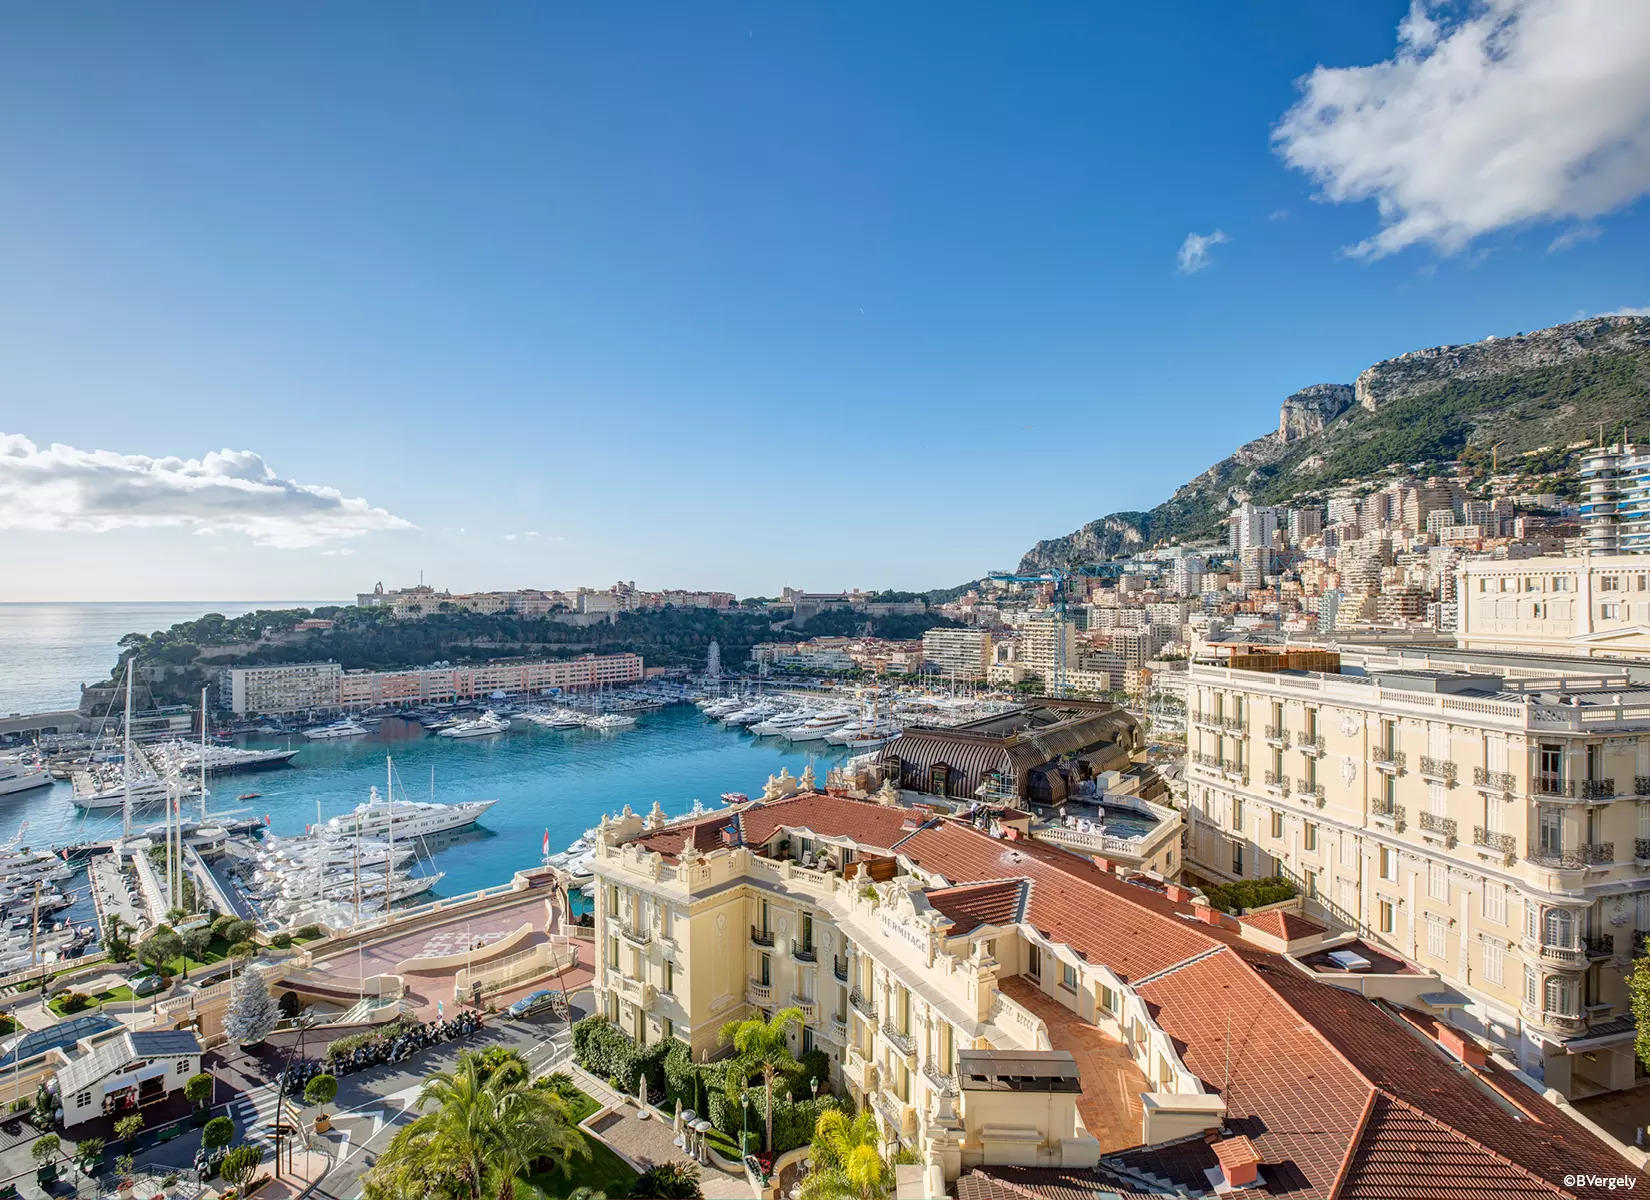 Come, explore Monaco with your family